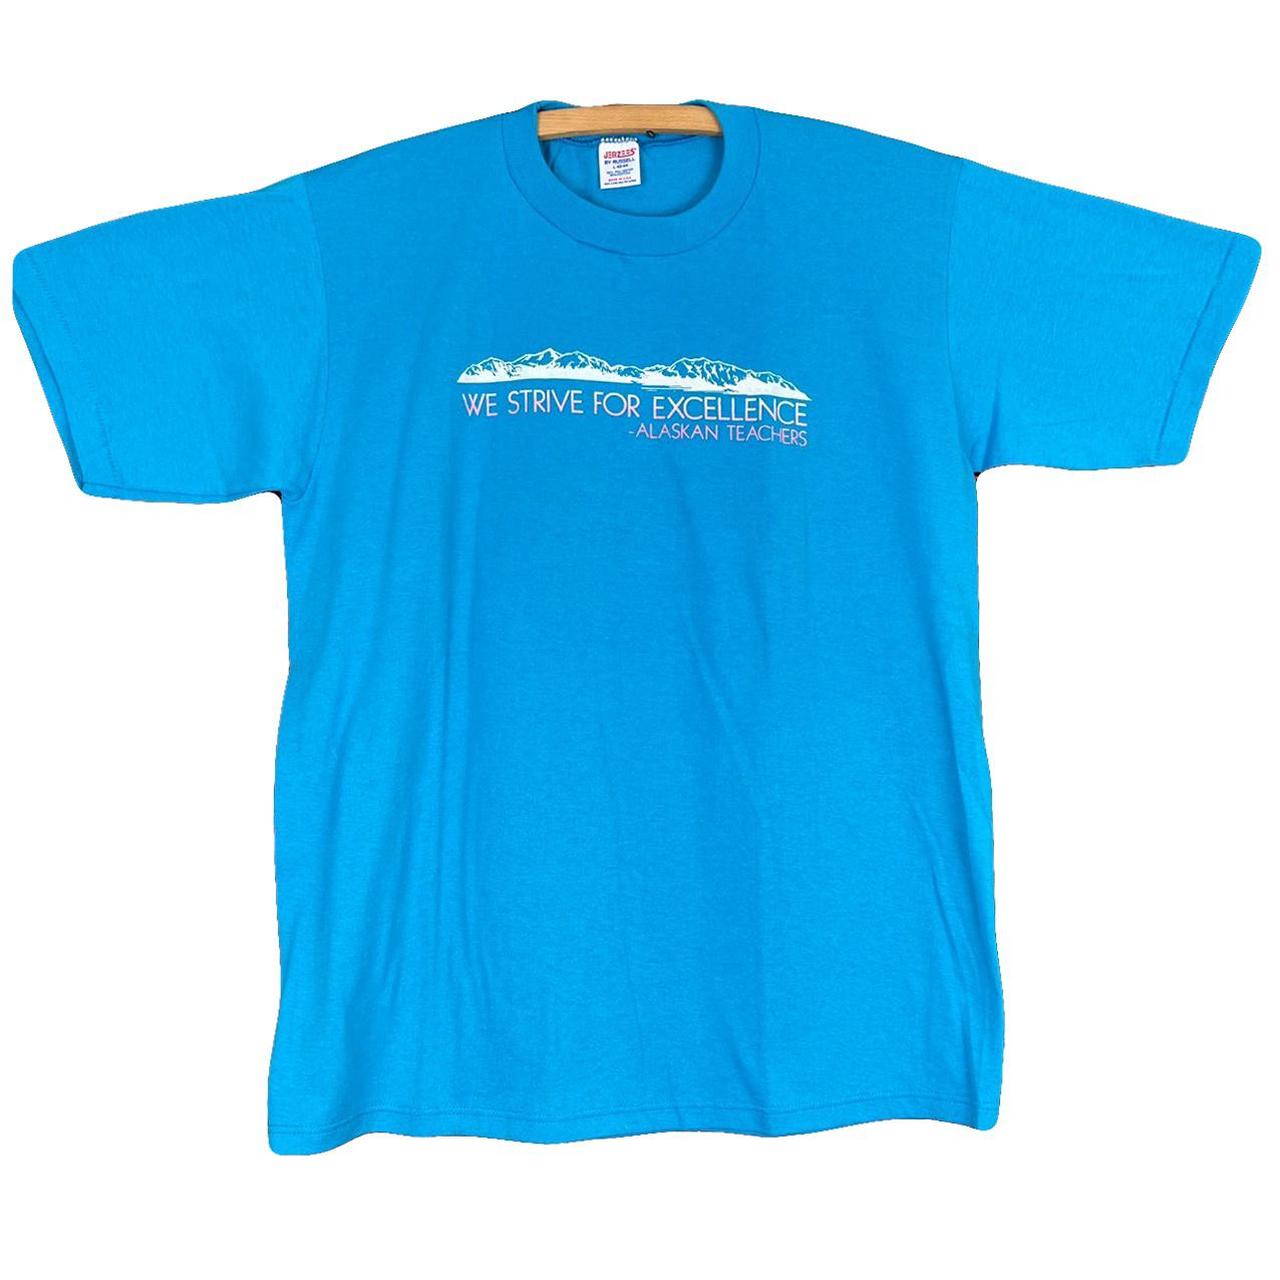 Product Image 1 - Vintage 1985 Alaskan Teachers T-Shirt

🌊Free